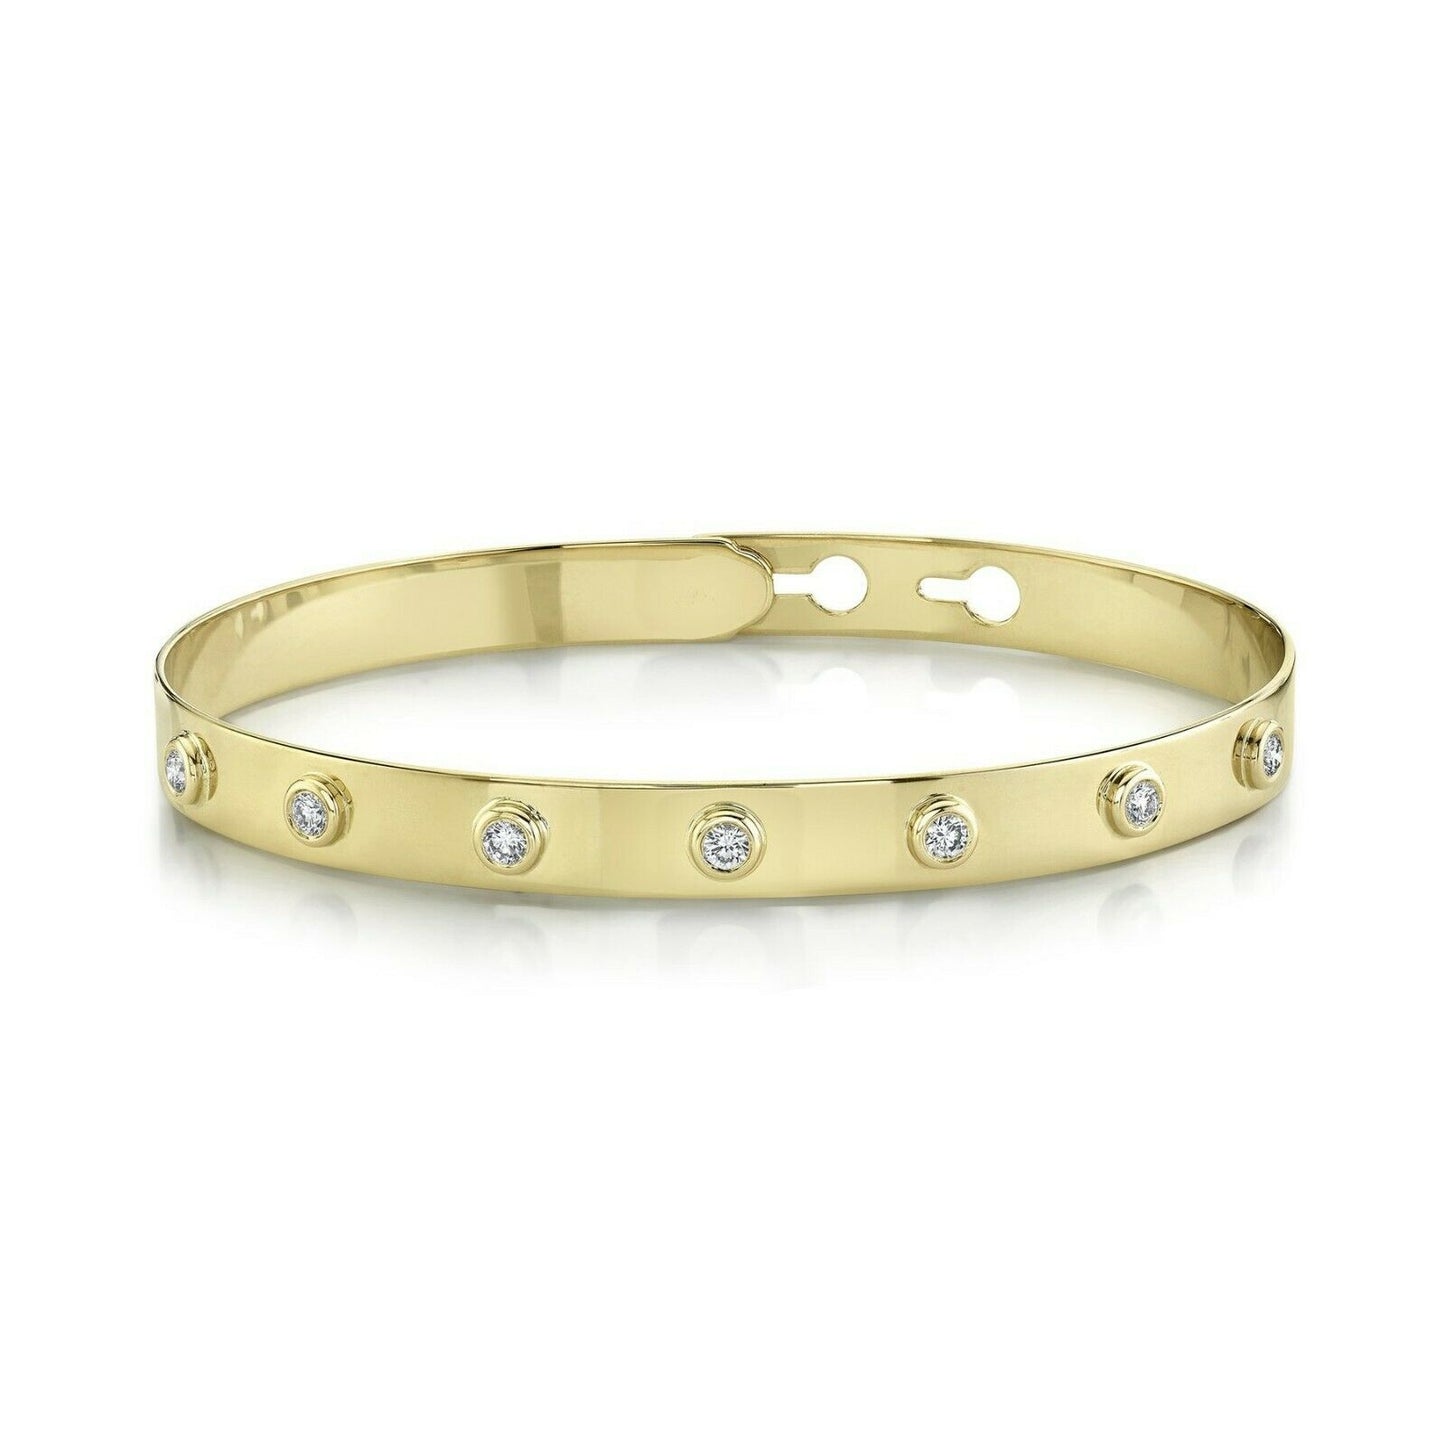 14K Gold 0.32 CT Diamond Latch Bangle Bracelet Adjustable Round Bezel Set Lock